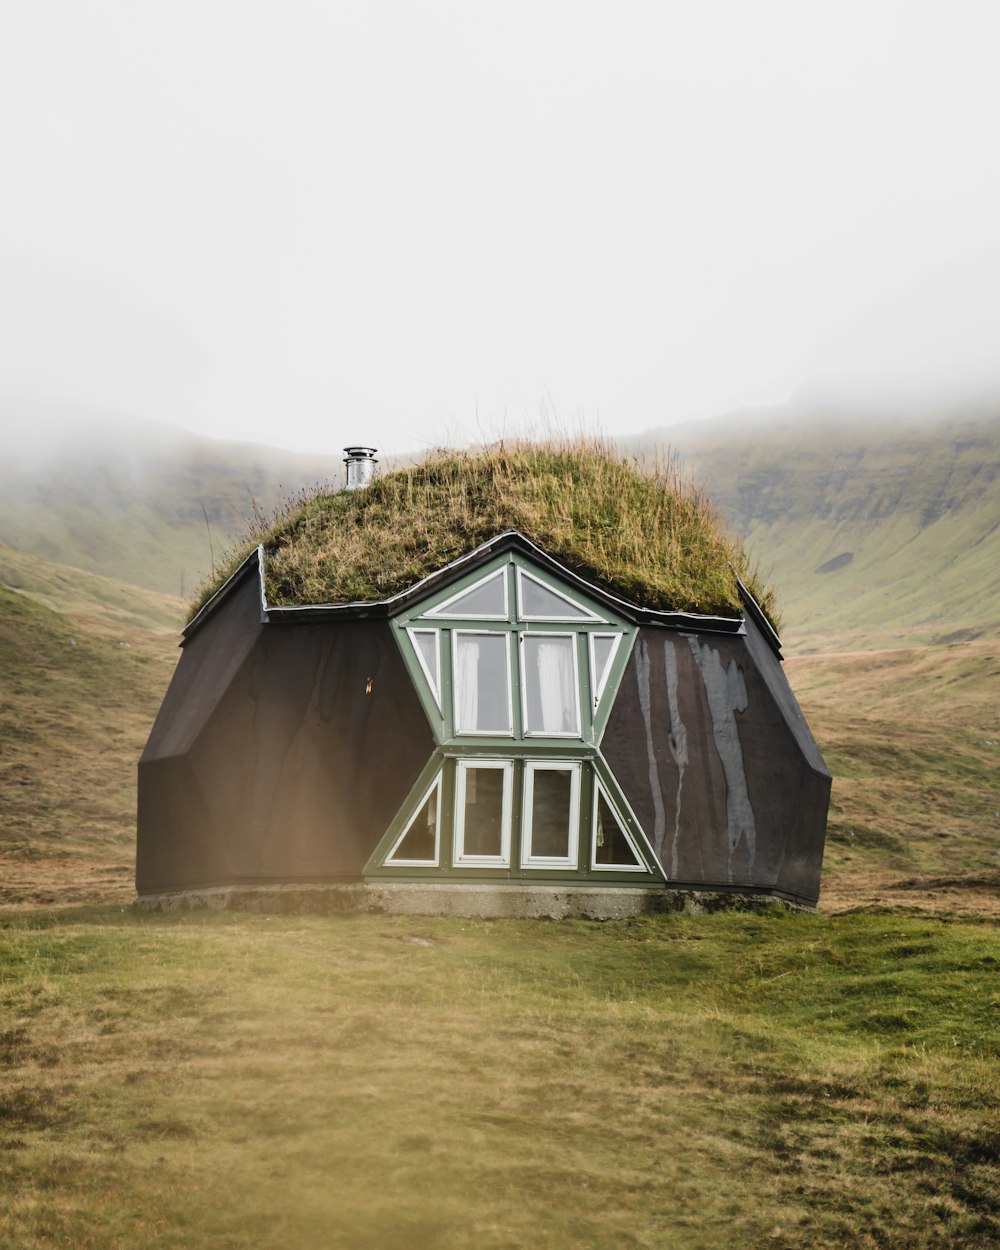 gray wooden house on green grass field